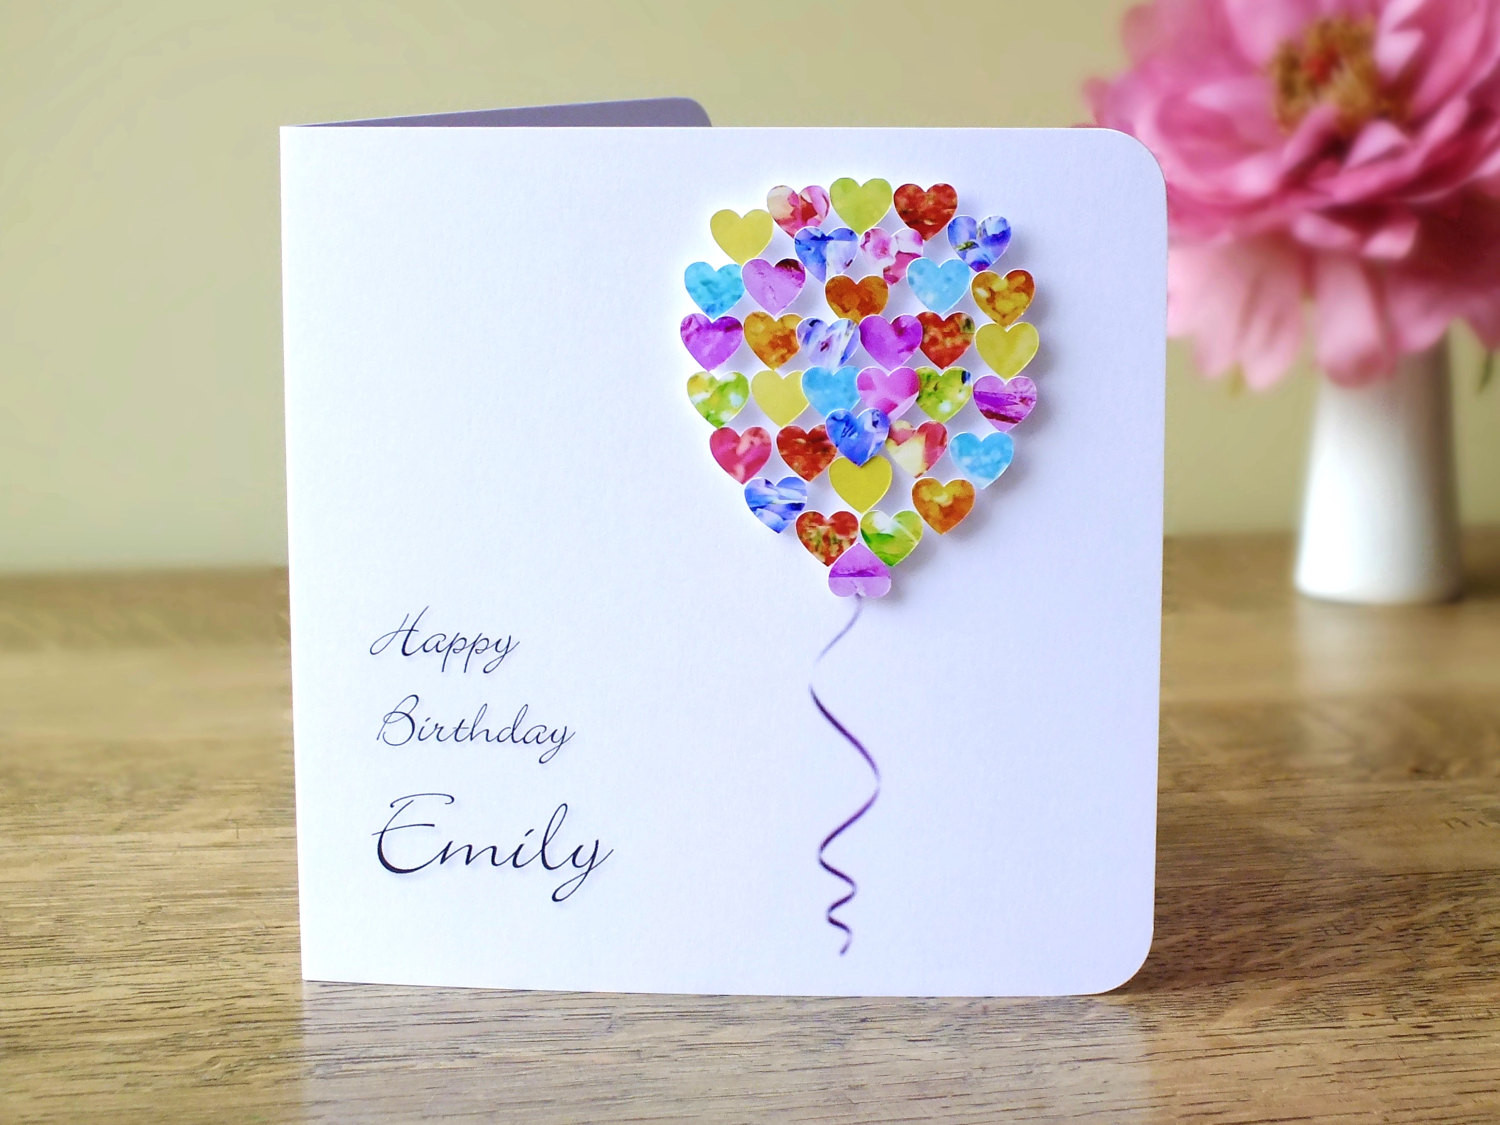 easy-handmade-birthday-cards-for-dad-bitrhday-gallery